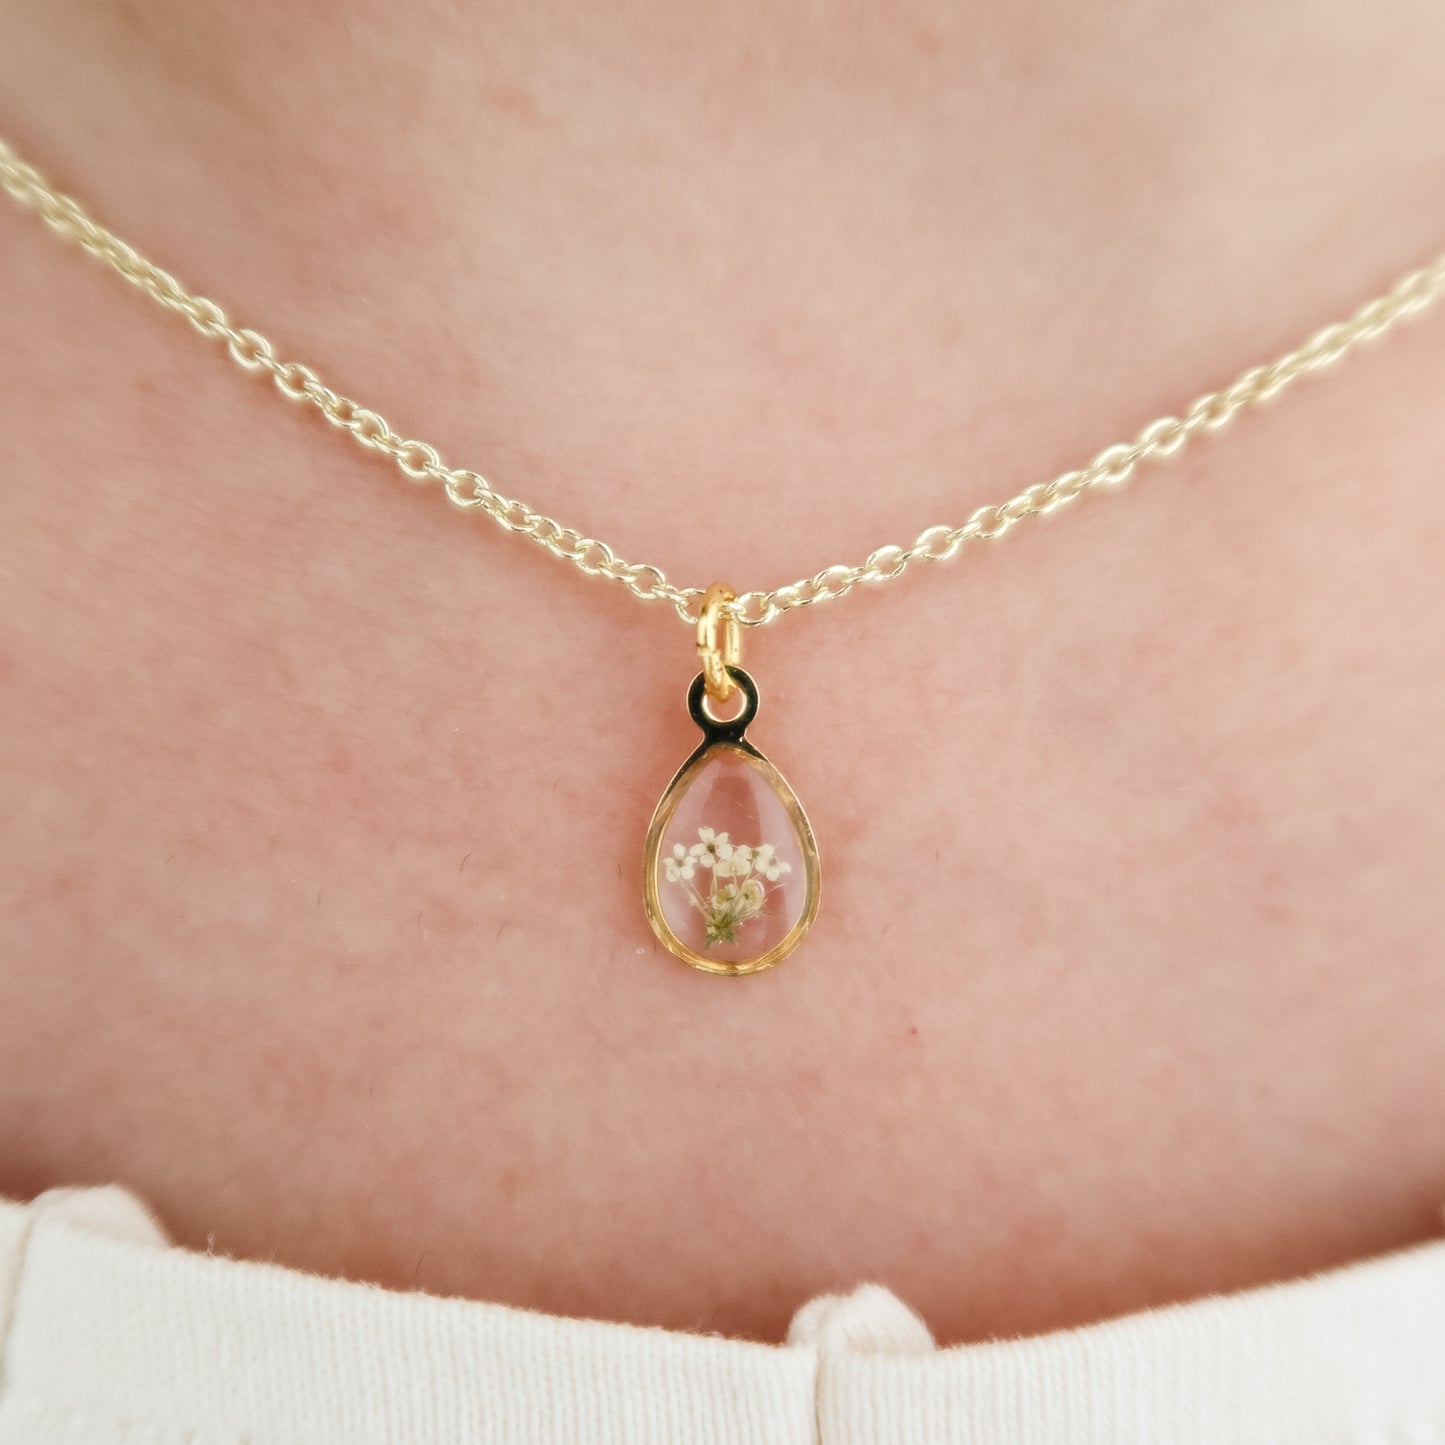 Raindrop Queen Anne's Lace Necklace